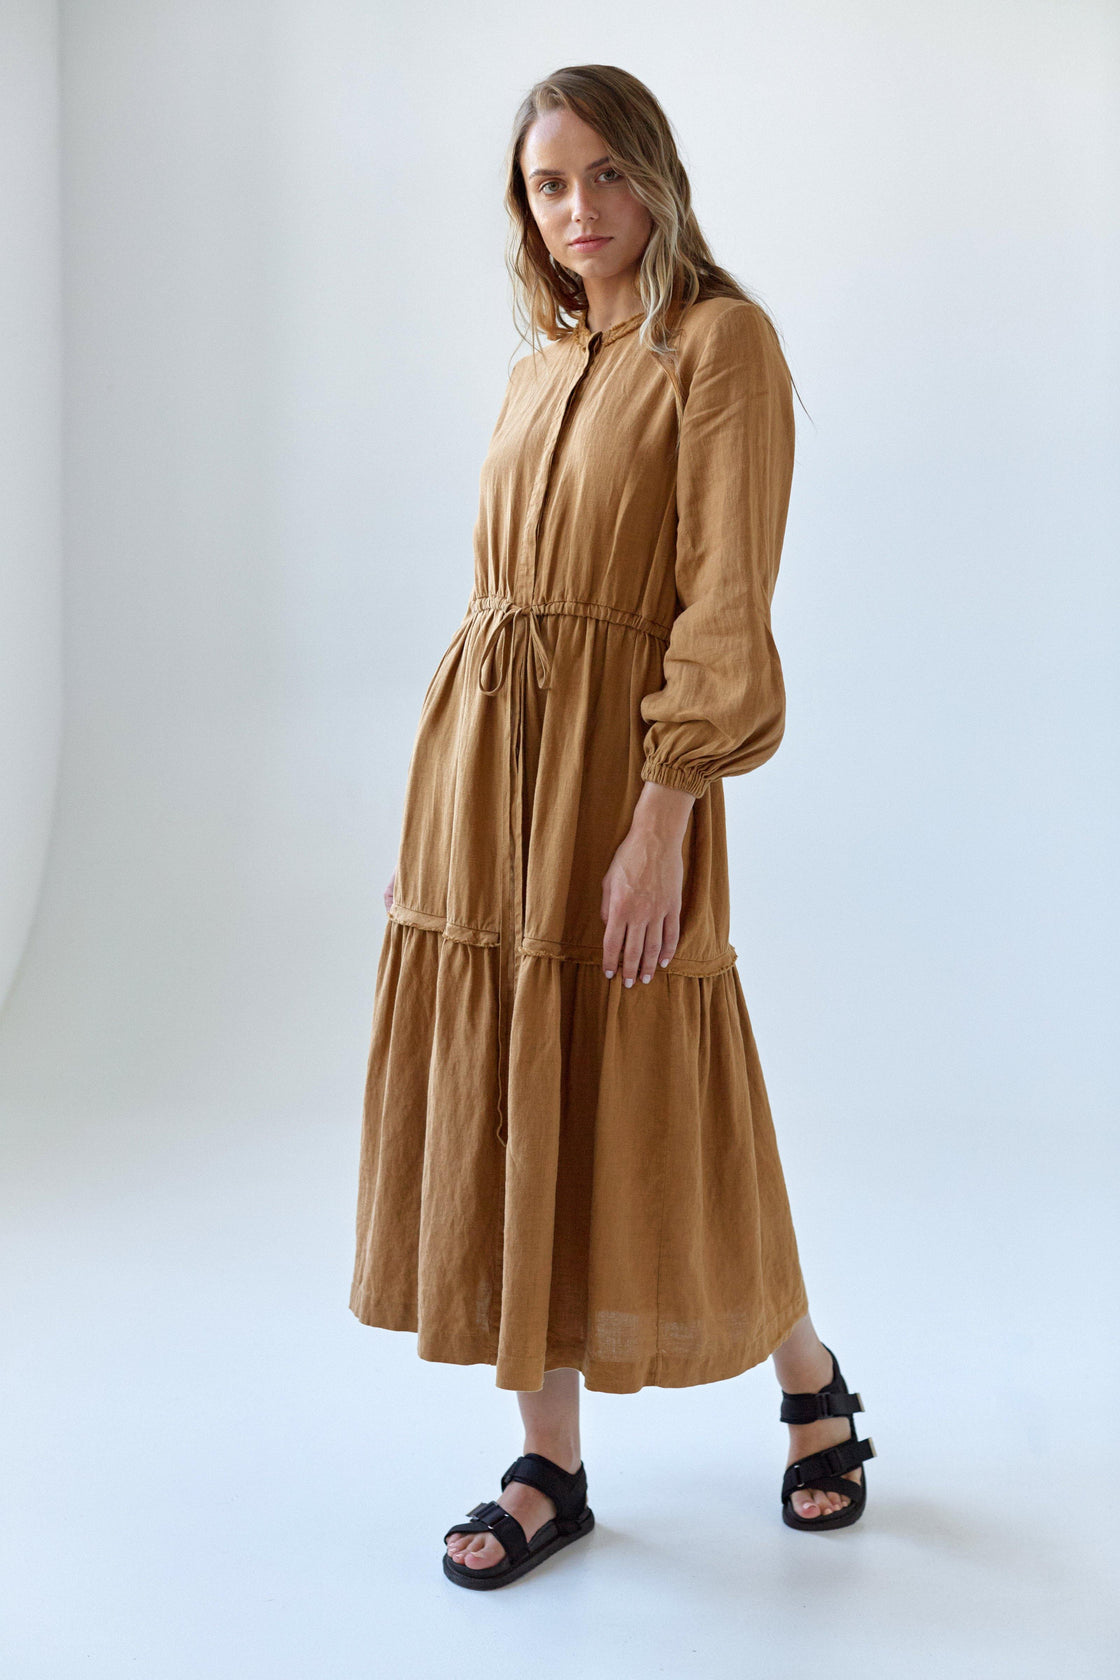 long sleeve brown peasant linen dress - Manufacture de Lin